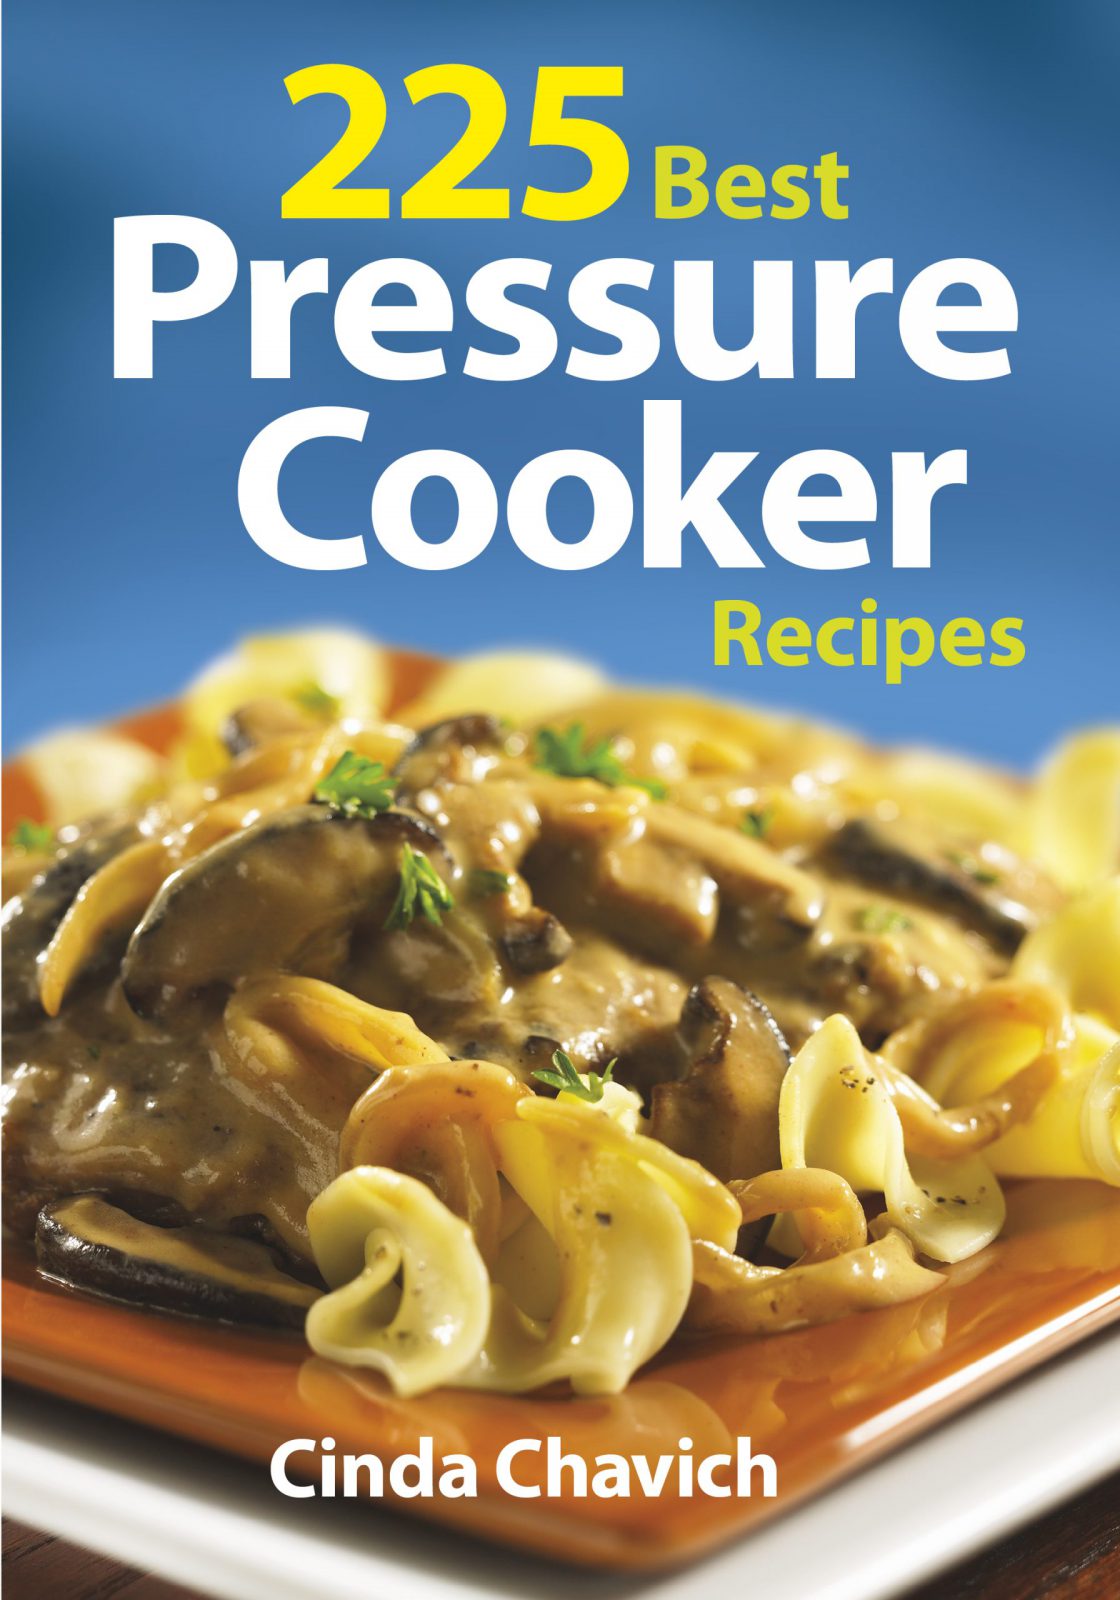 225 Best Pressure Cooker Recipes